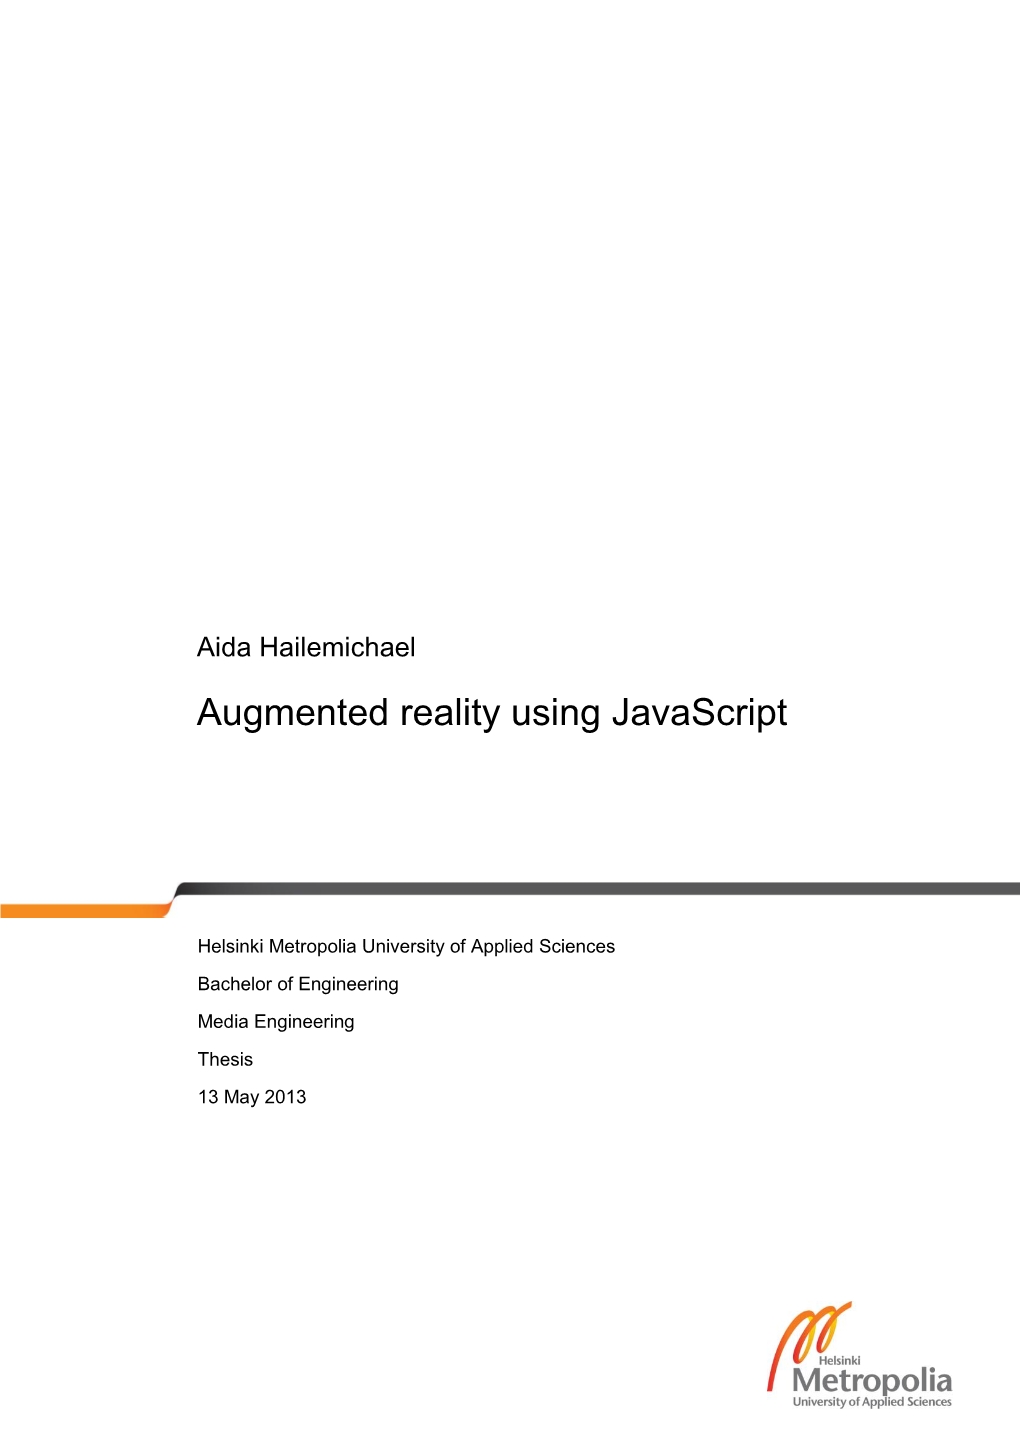 Augmented Reality Using Javascript